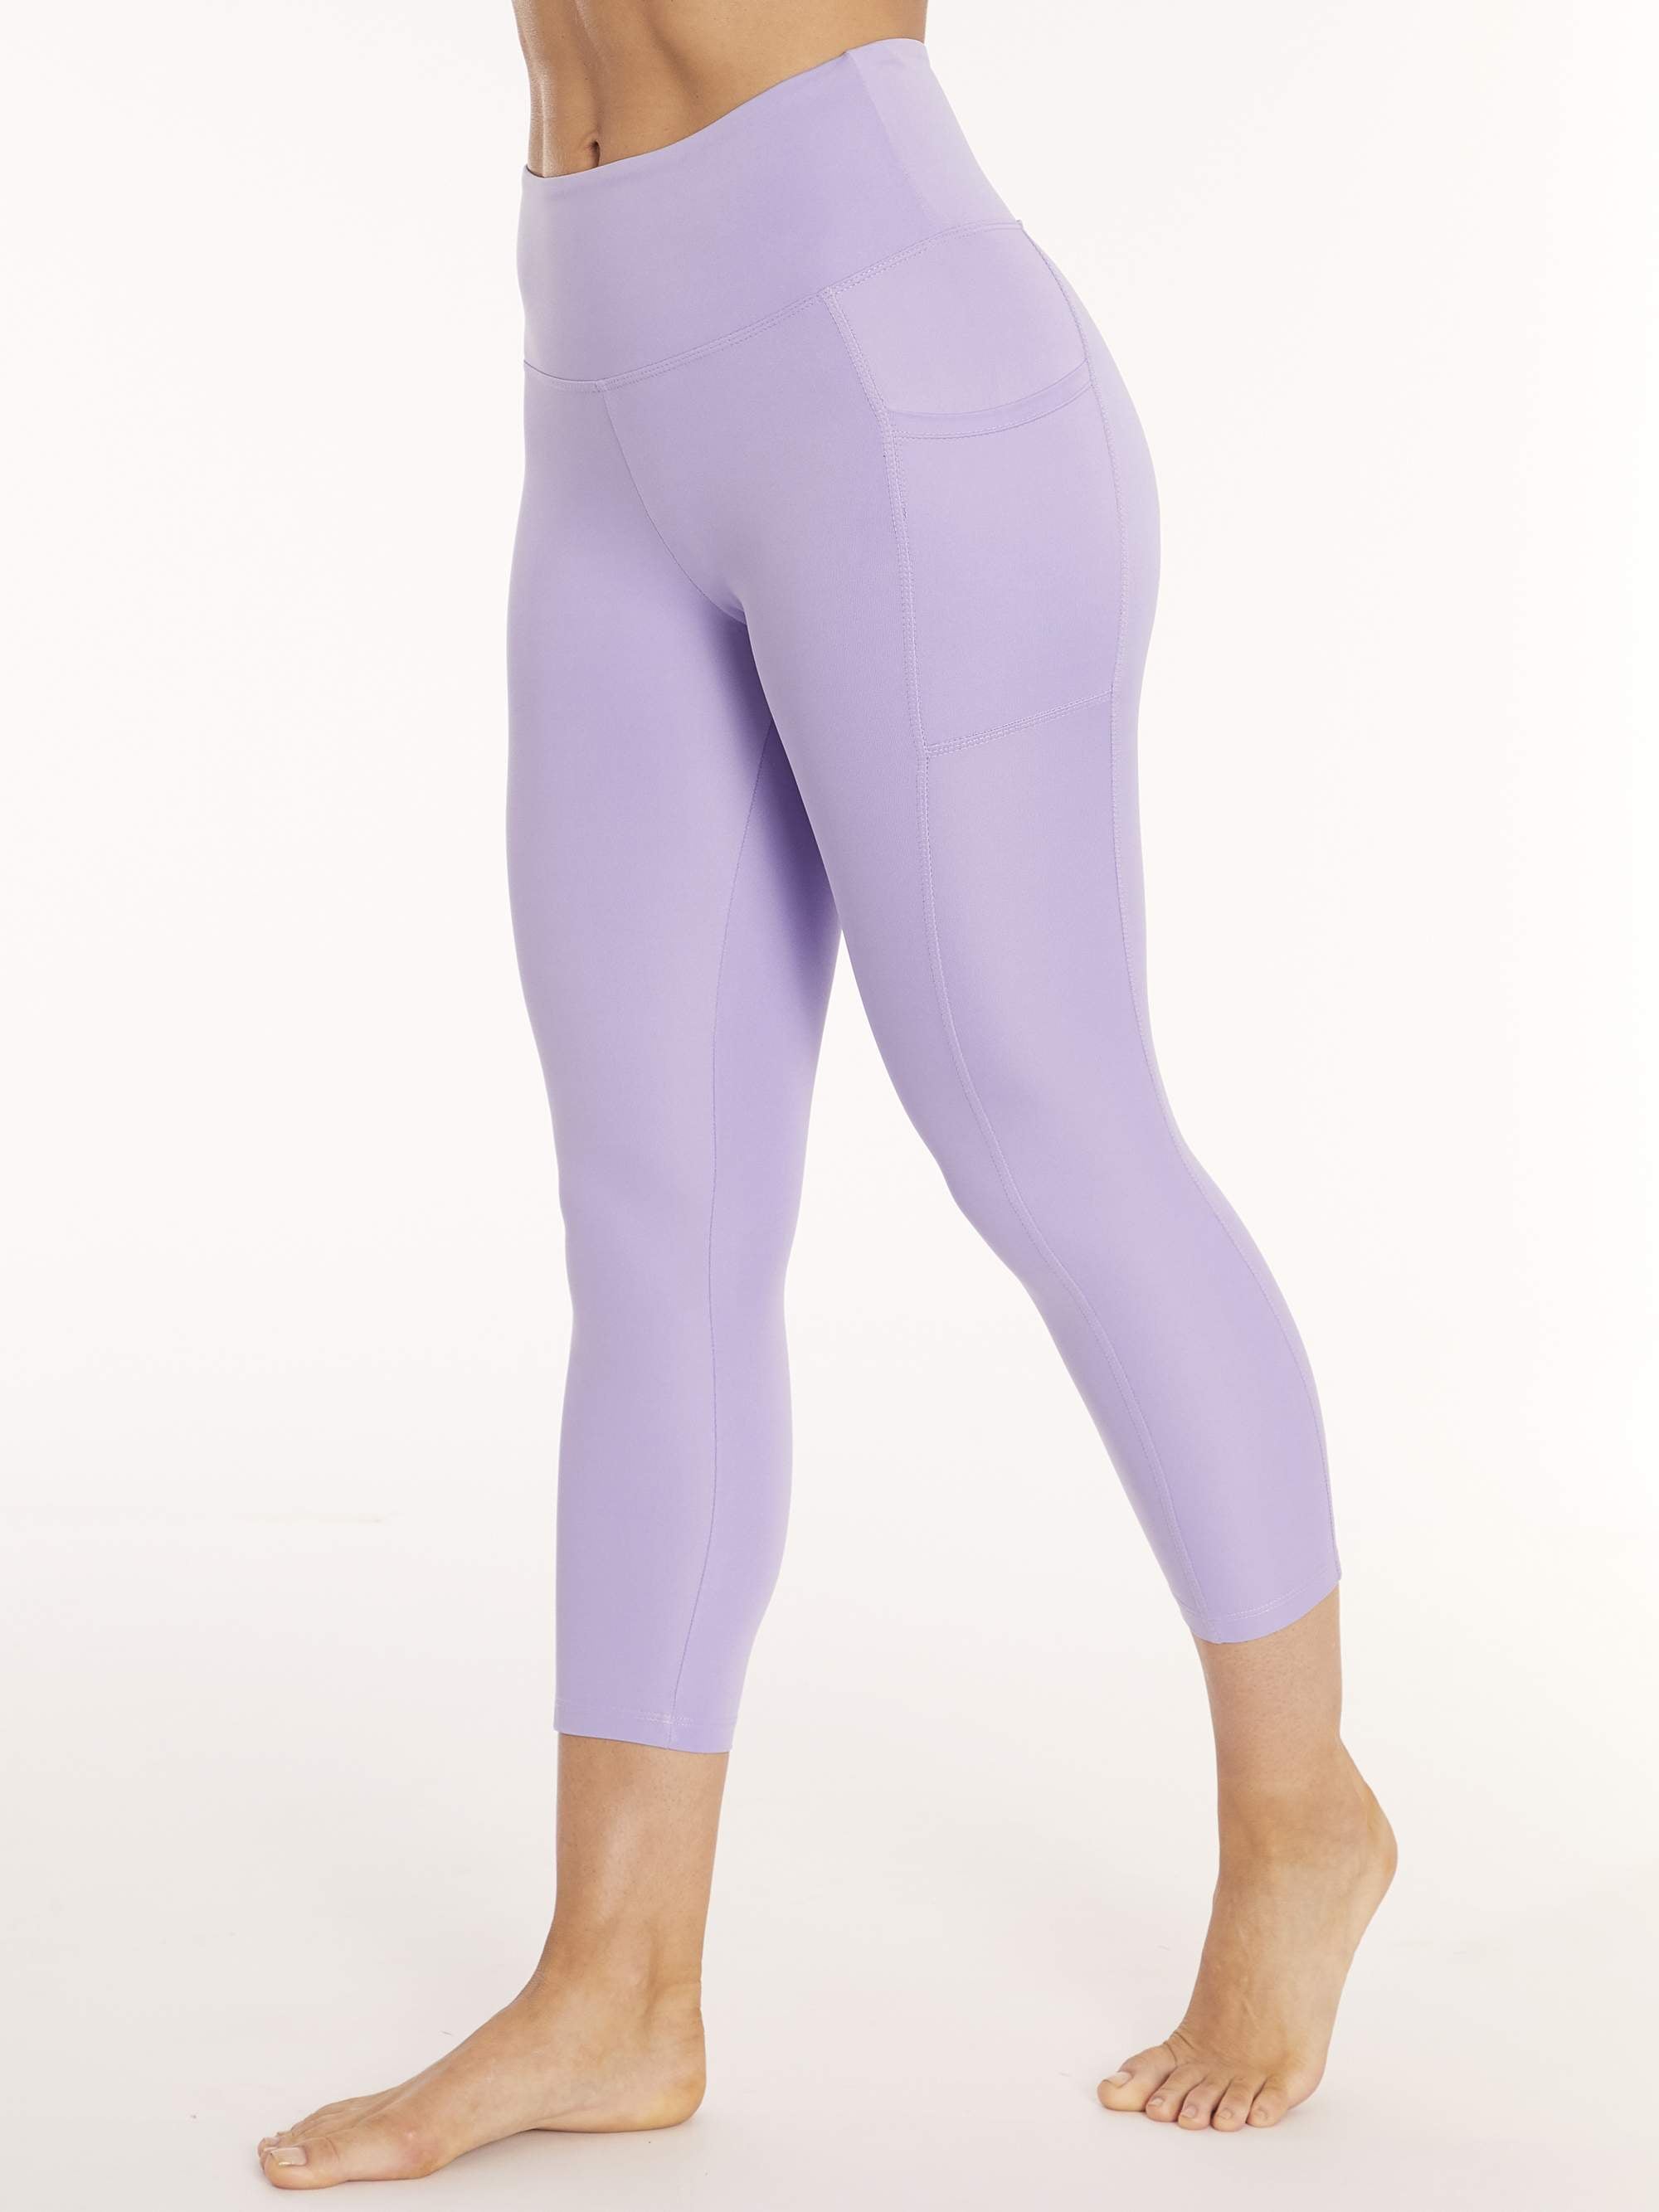 YYDGH High Waisted Corset Leggings for Women Tummy Control Athletic Motion Leggings  Waist Shaper Workout Yoga Pants Pink M - Walmart.com